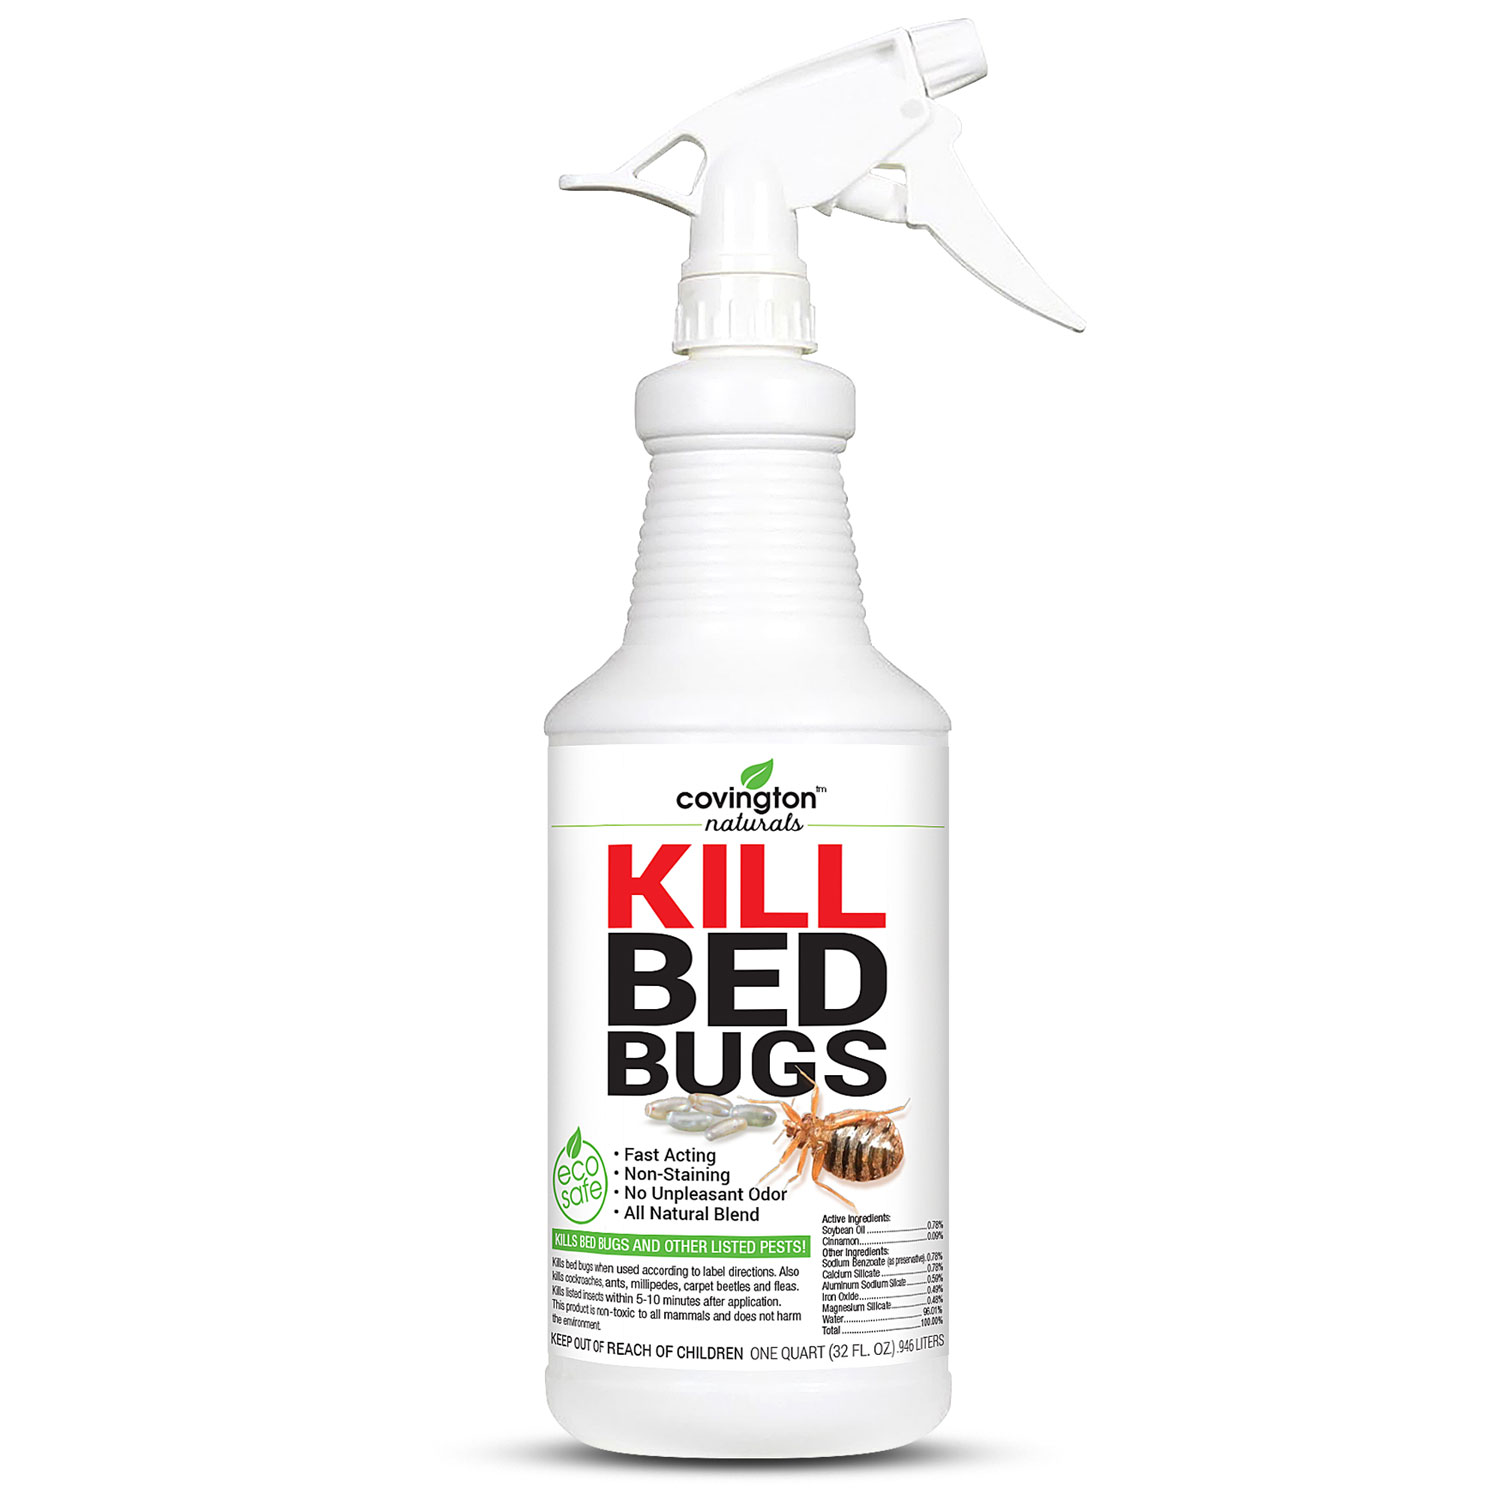 Covington Naturals Kill Bed Bugs